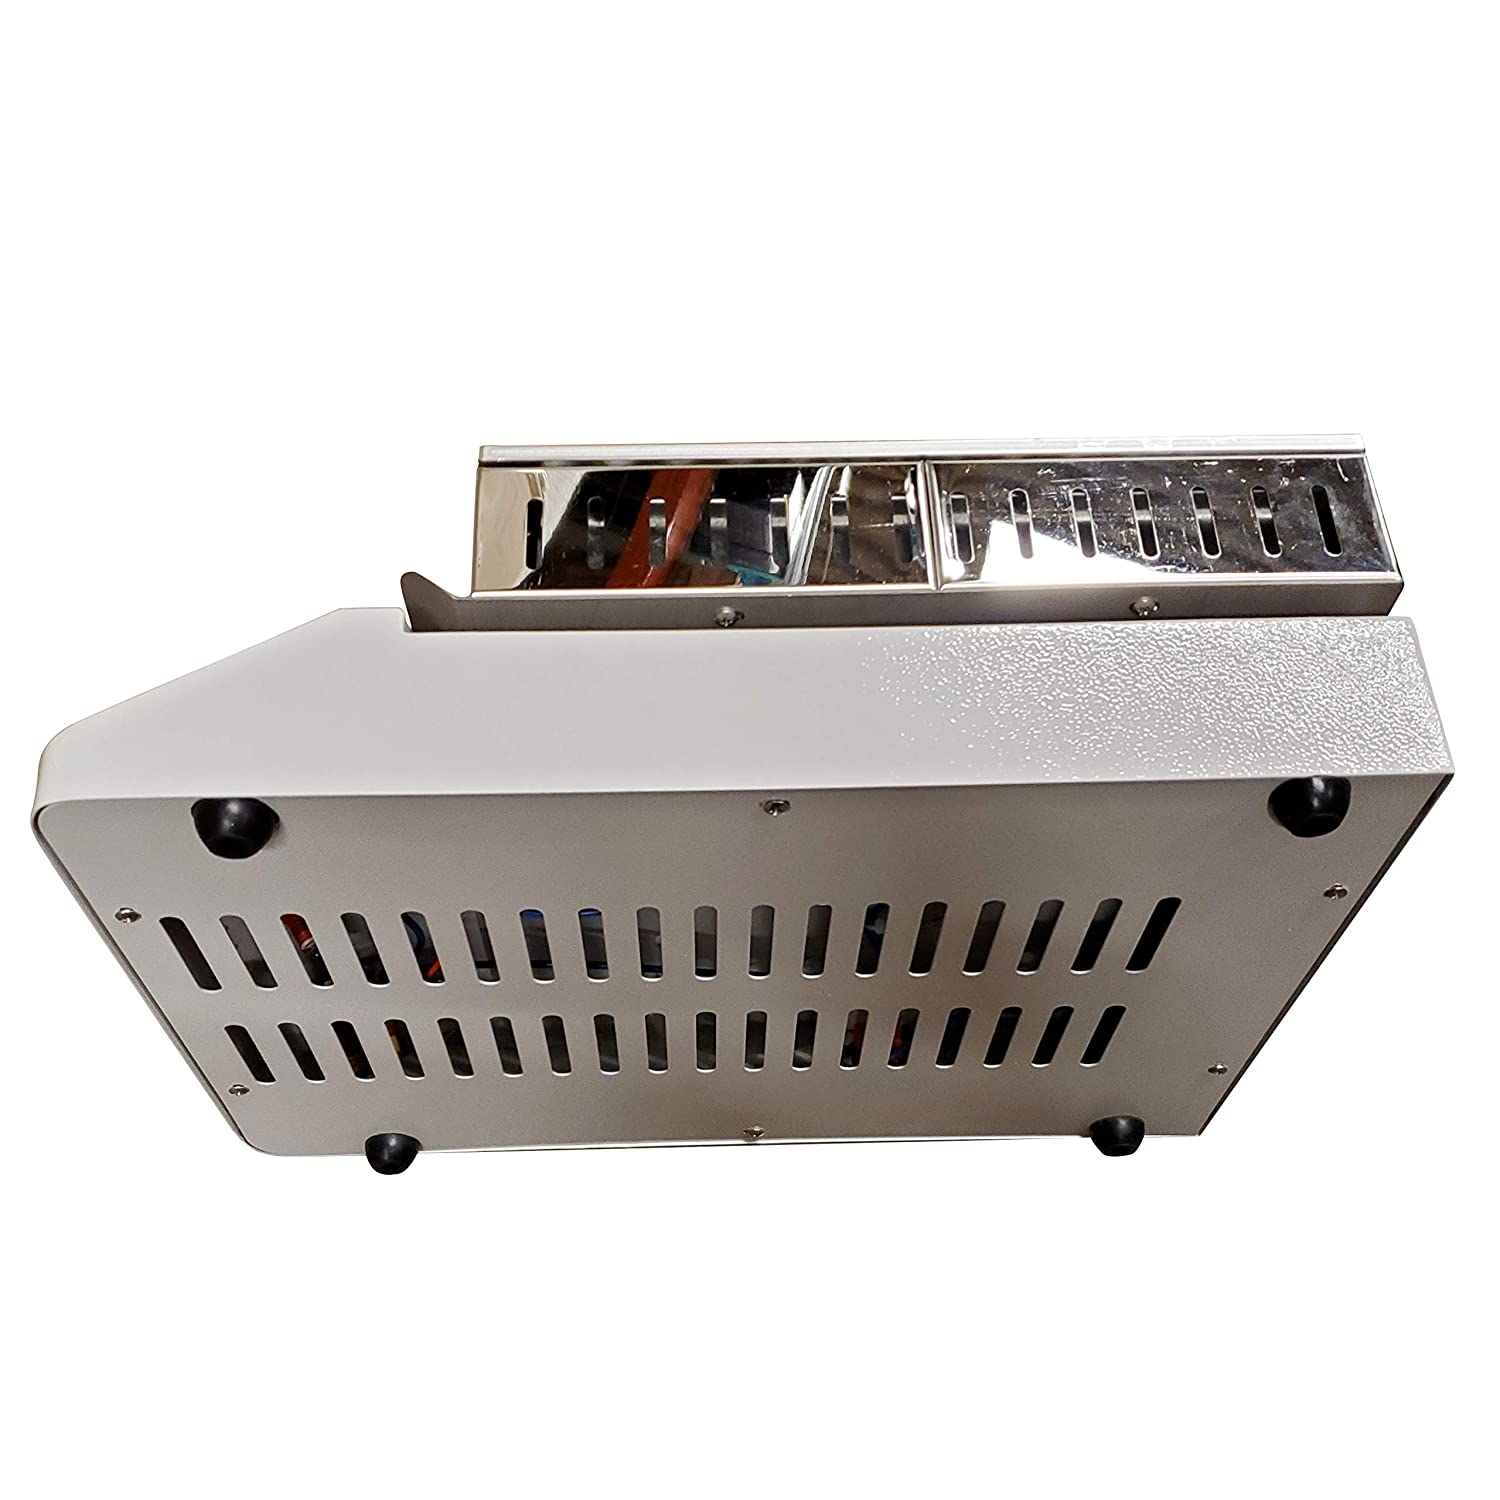 150612 - EchoTherm Digital Hot Plate Stirrer, Large Capacity, 12 x